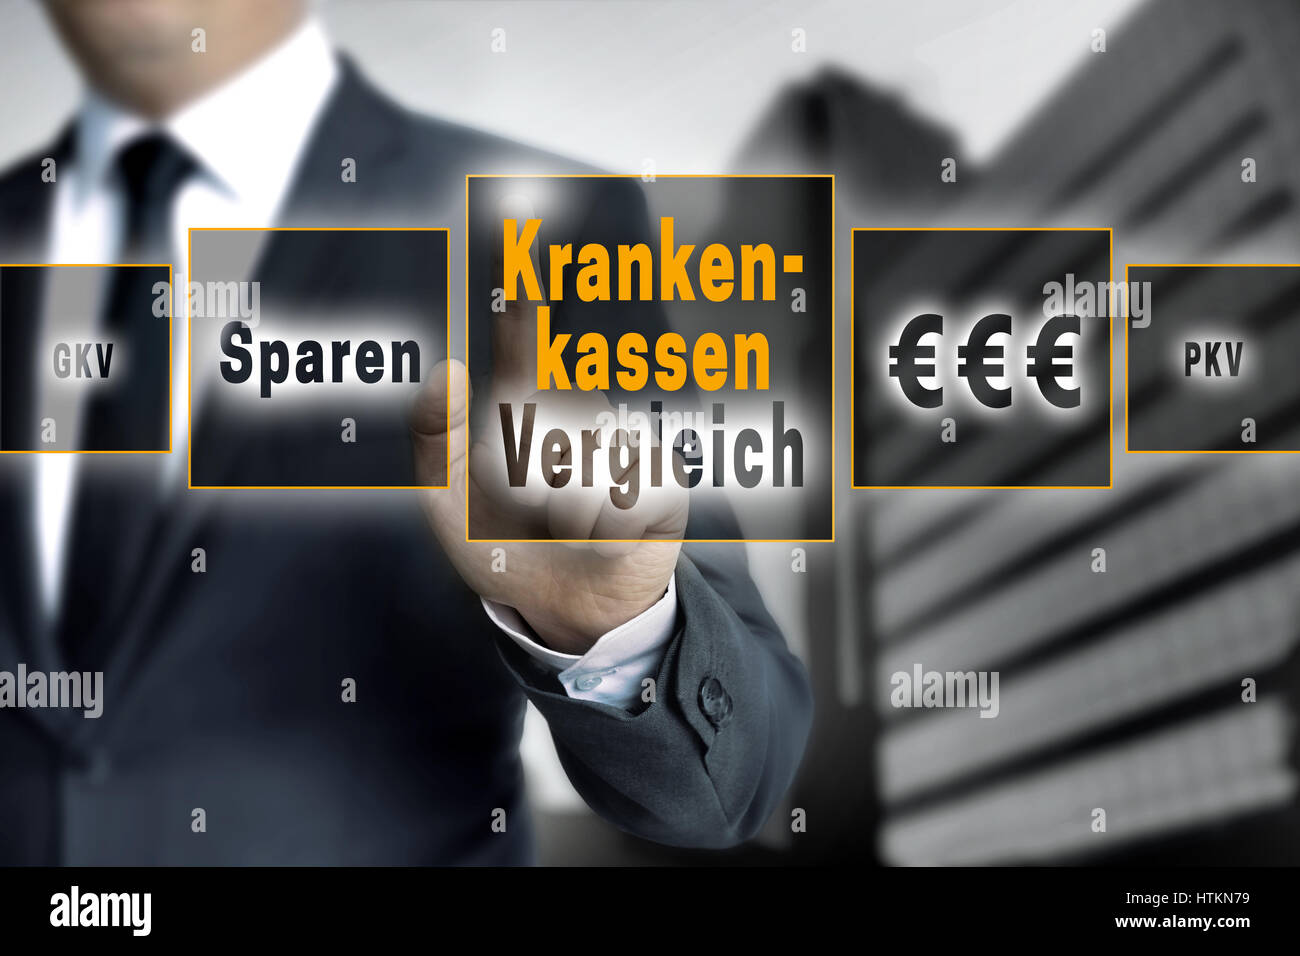 Krankenkassen Vergleich (in german Healthcare comparison, save) touchscreen is operated by a businessman. Stock Photo